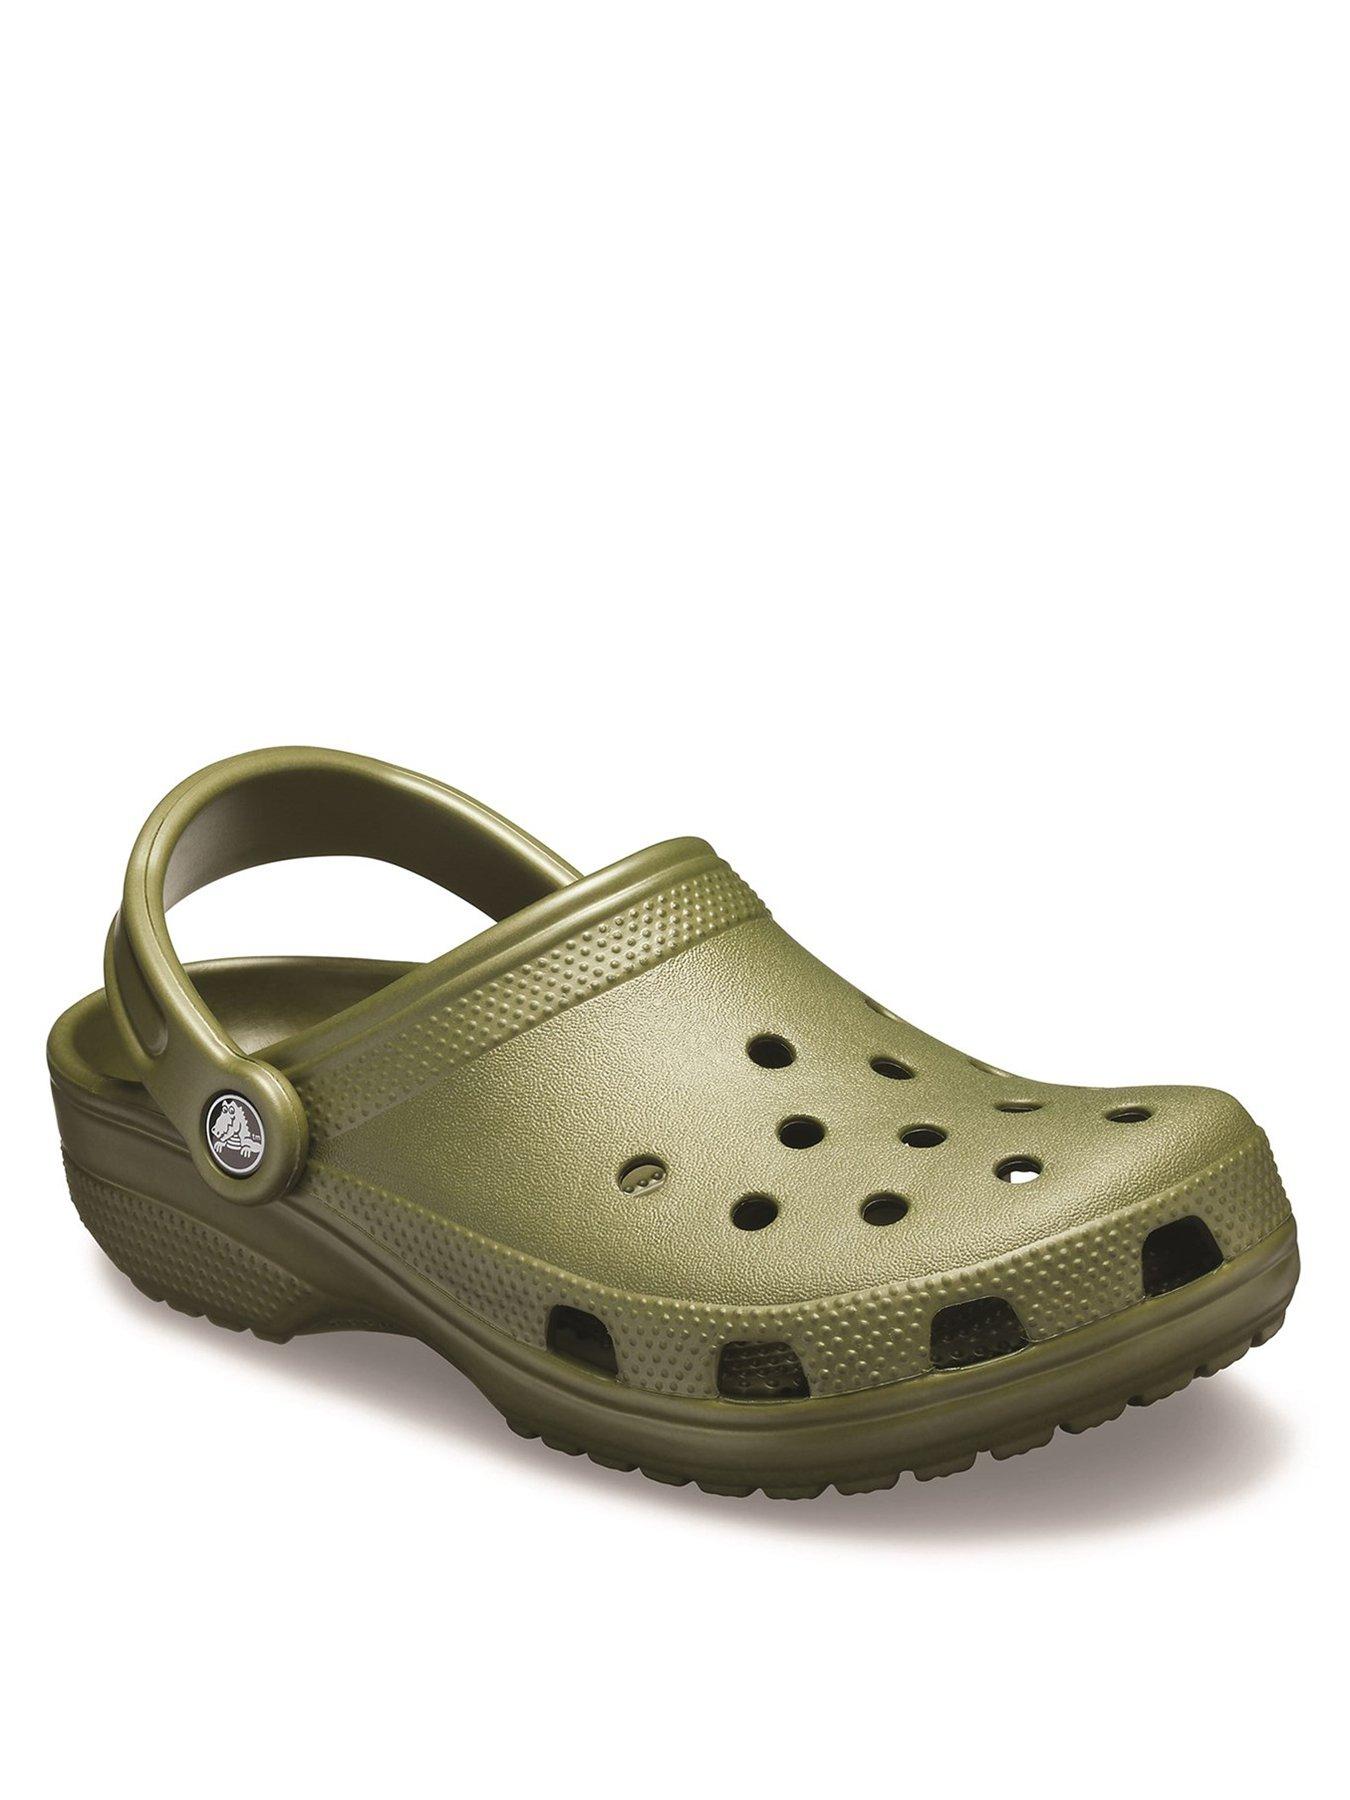 crocs latest